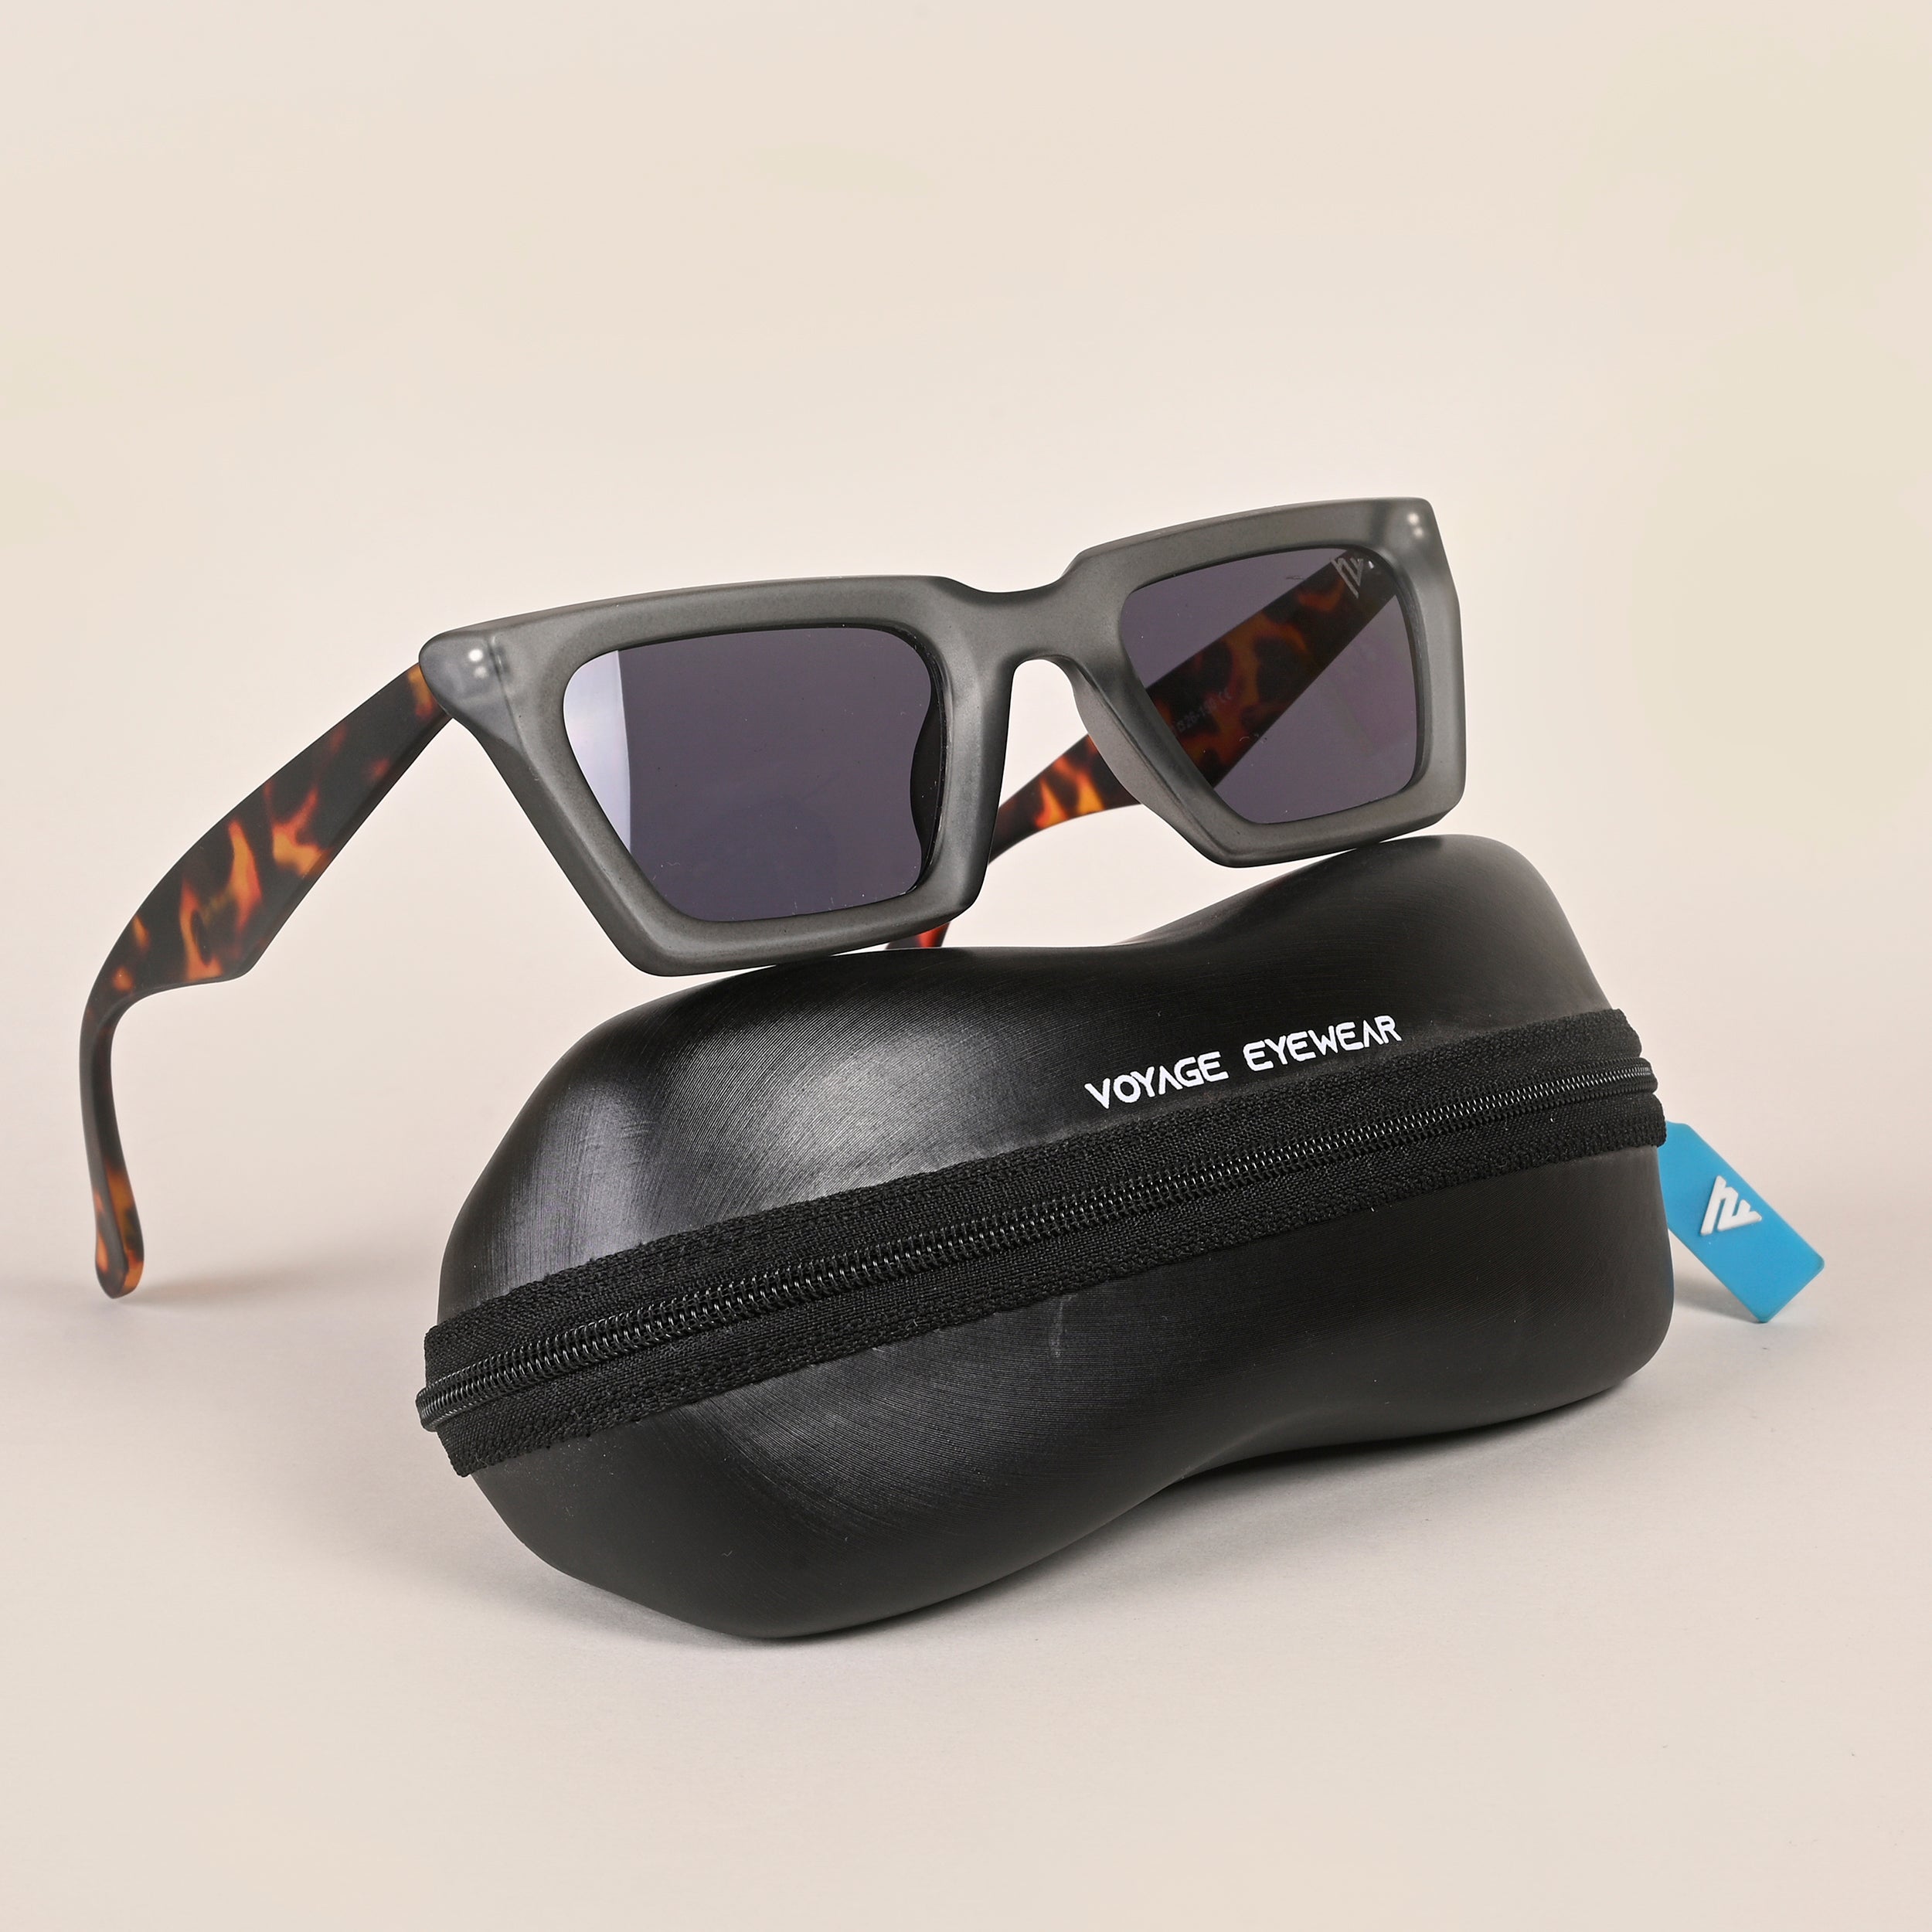 Voyage Black Wayfarer Sunglasses for Men & Women - MG4124